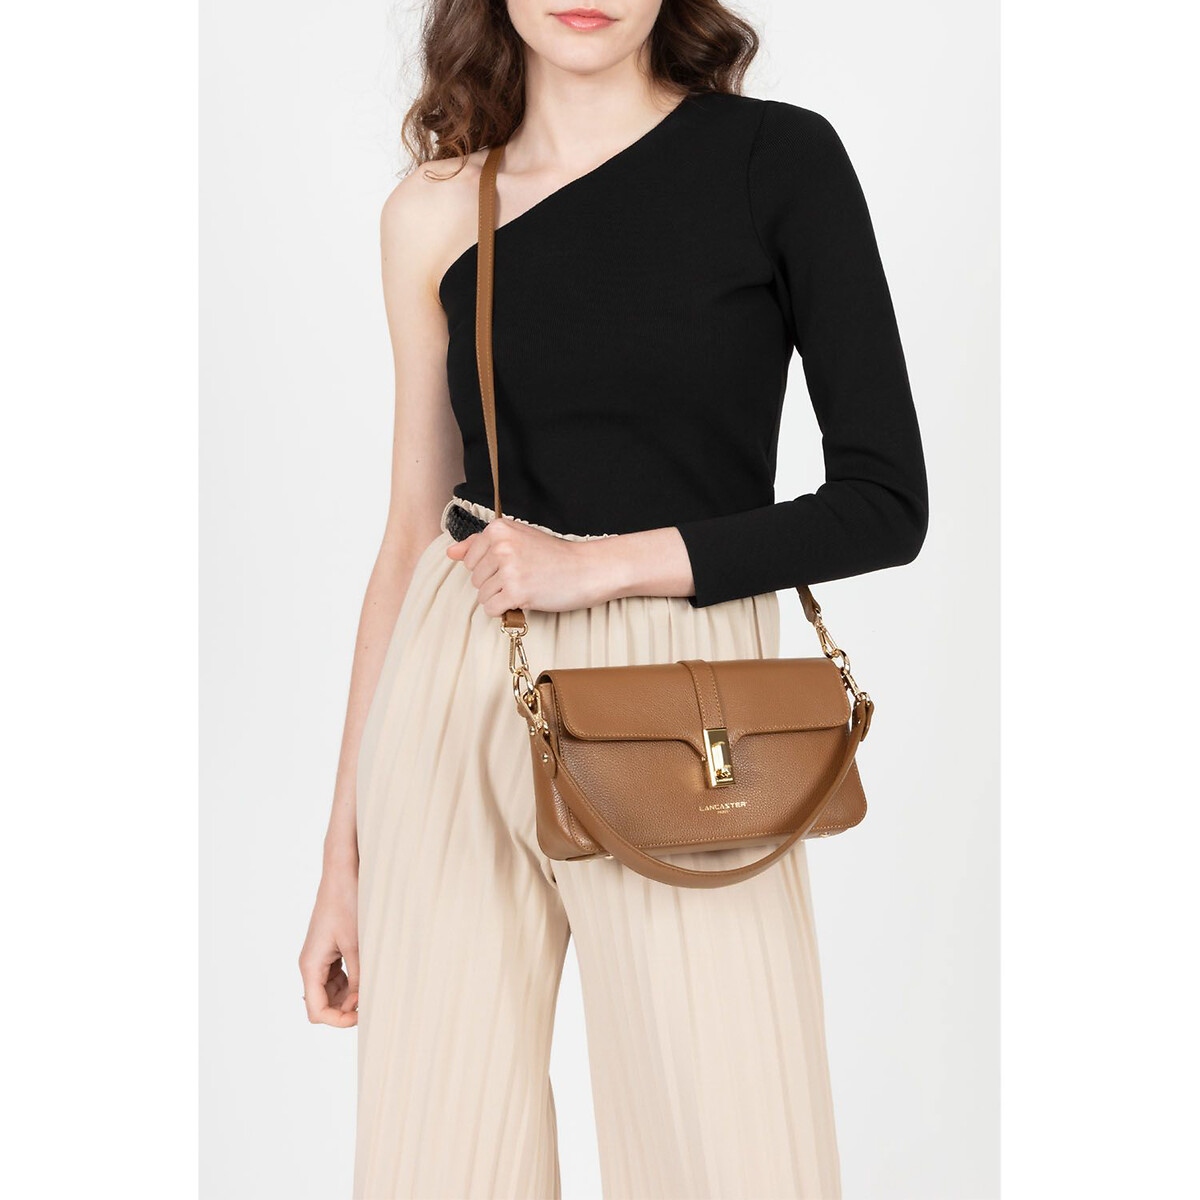 Кожаная сумка-багет FOULONN MILANO единый размер каштановый женский багет julie с ремнем на плечо american leather co